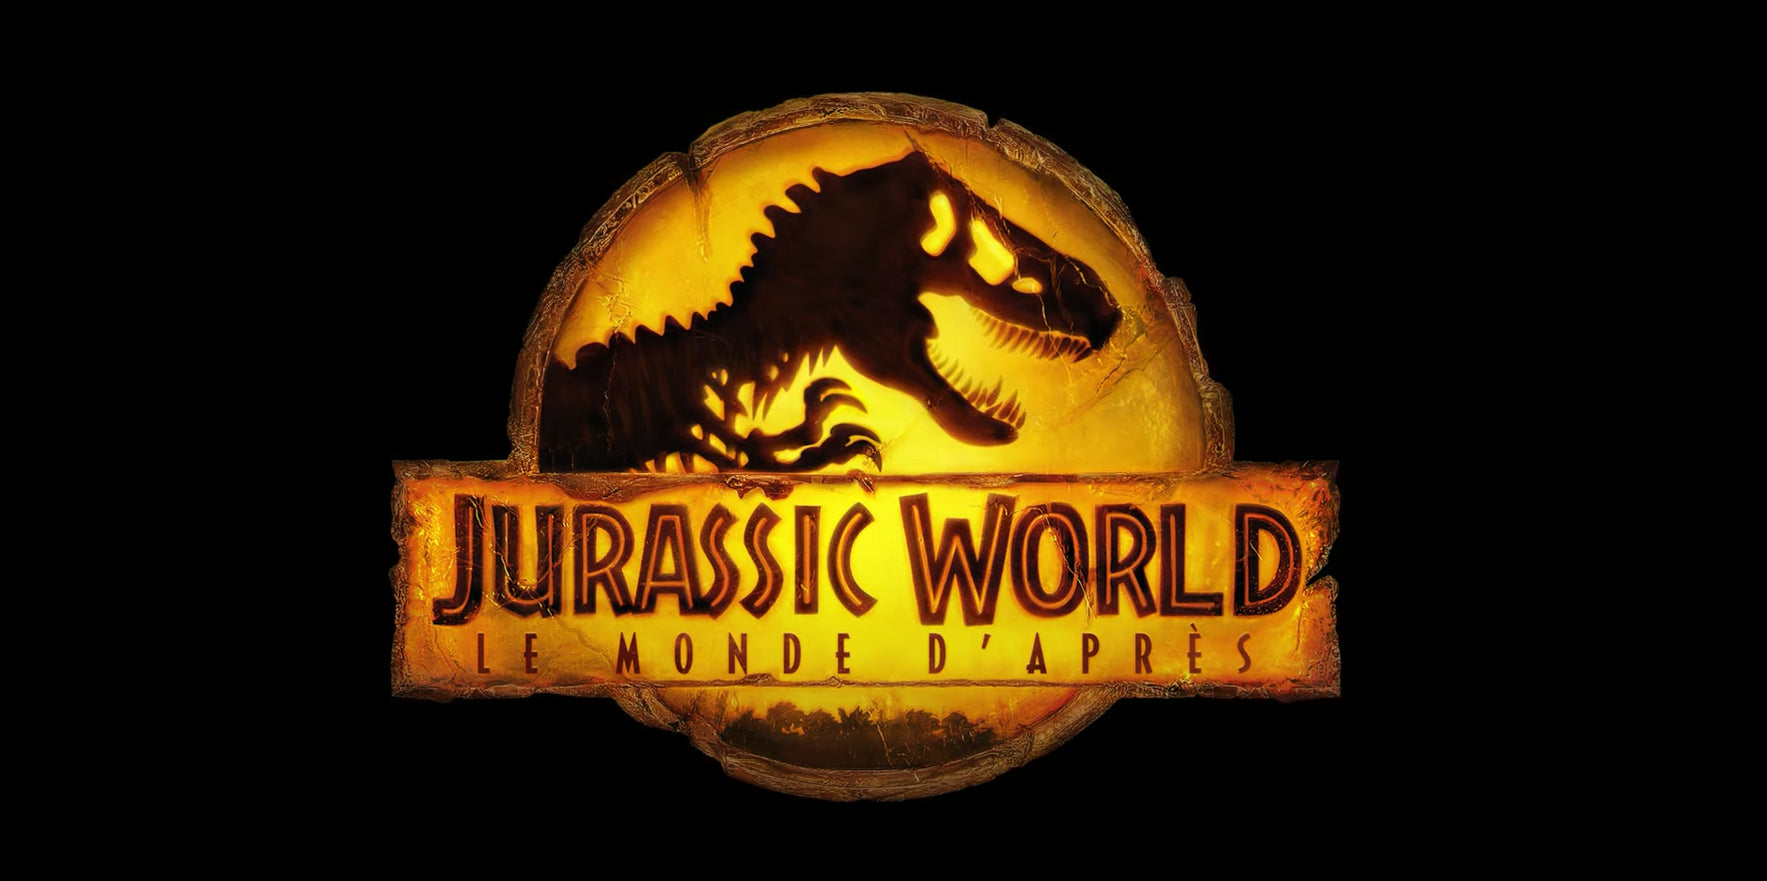 Jurassic World le monde d'après en DVD, Blu-Ray et 4K UHD